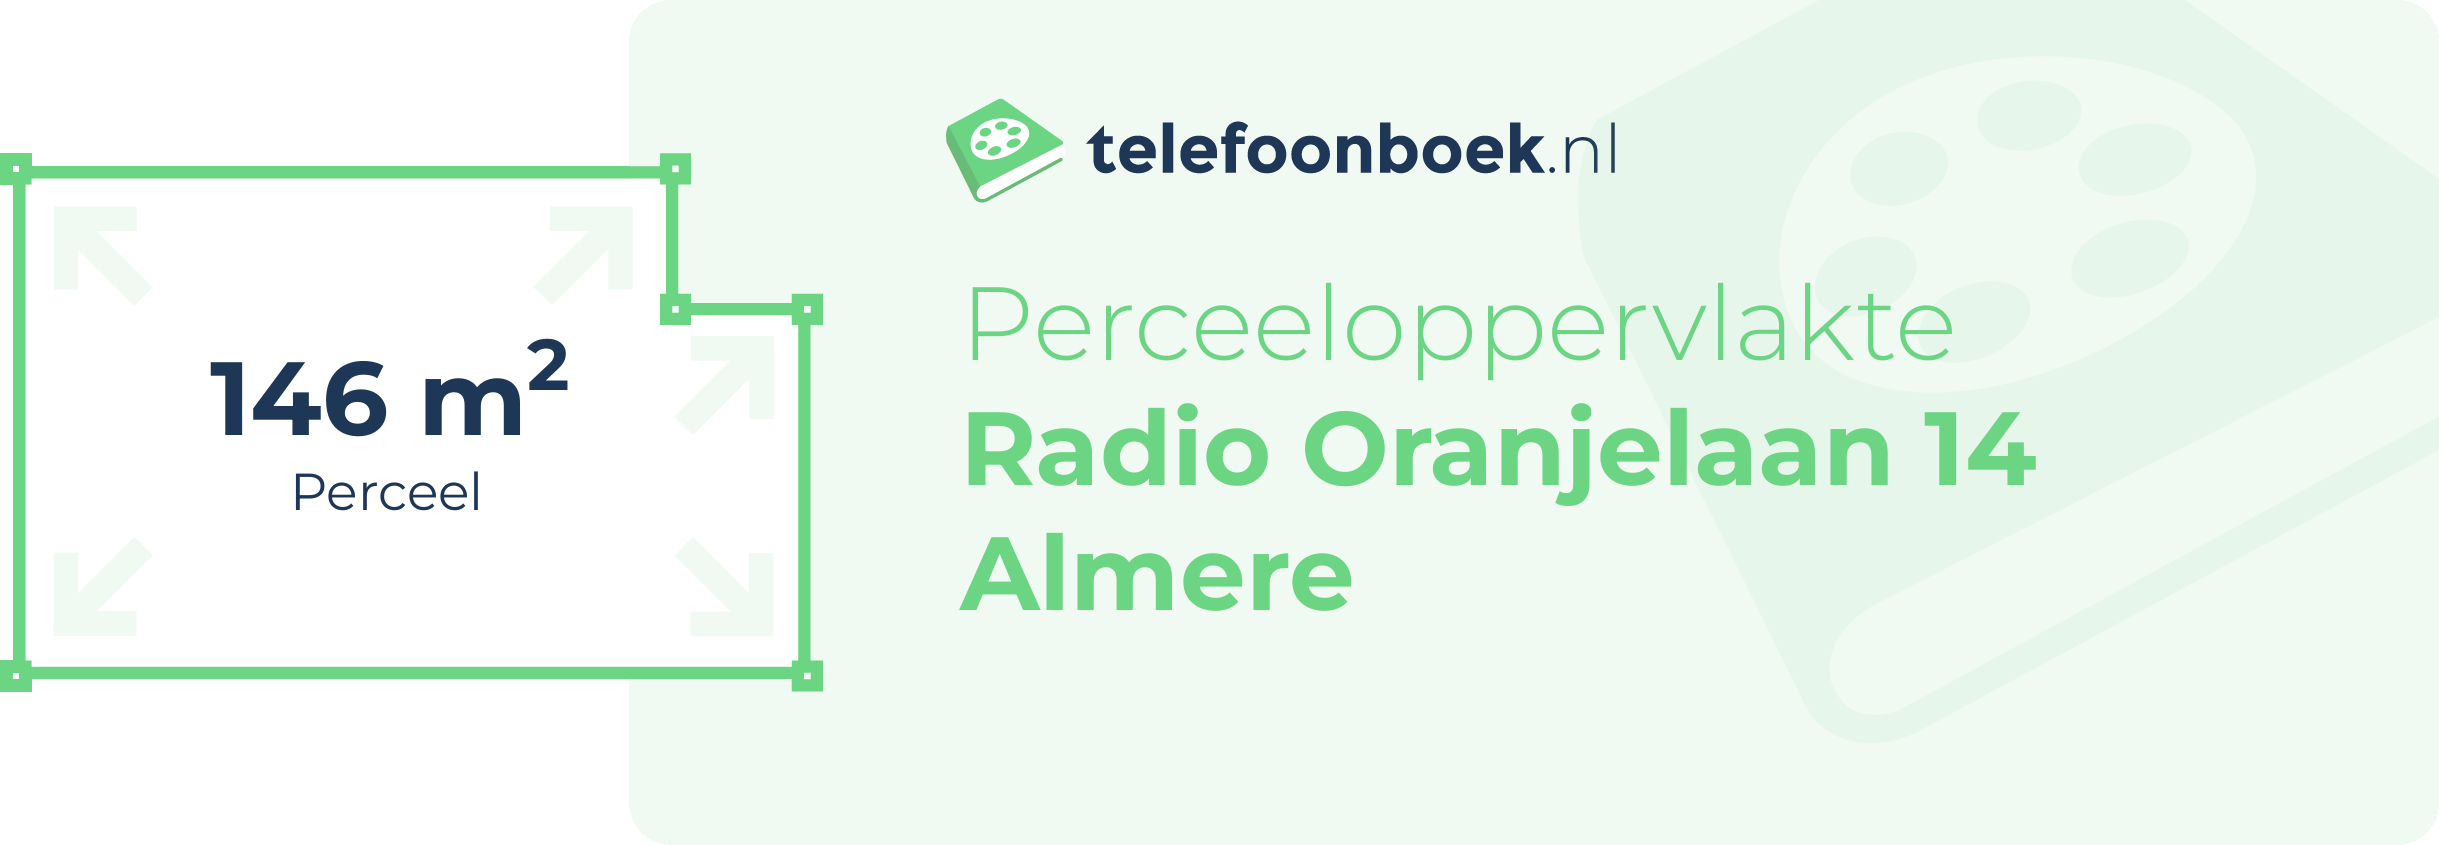 Perceeloppervlakte Radio Oranjelaan 14 Almere